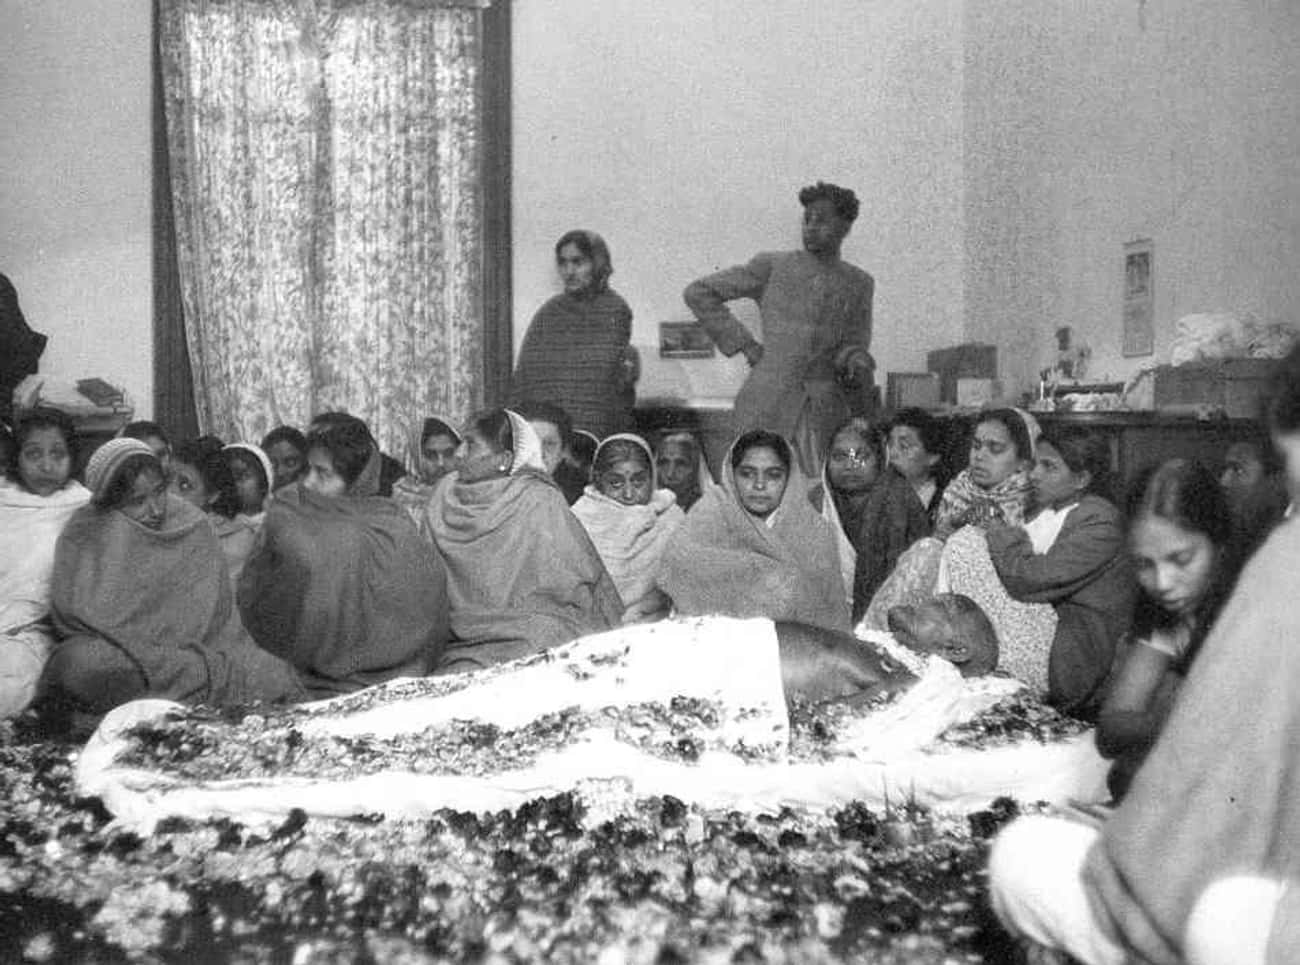 Nathuram Godse Was Hanged For Killing Gandhi, Against The Wishes Of Gandhi's Sons